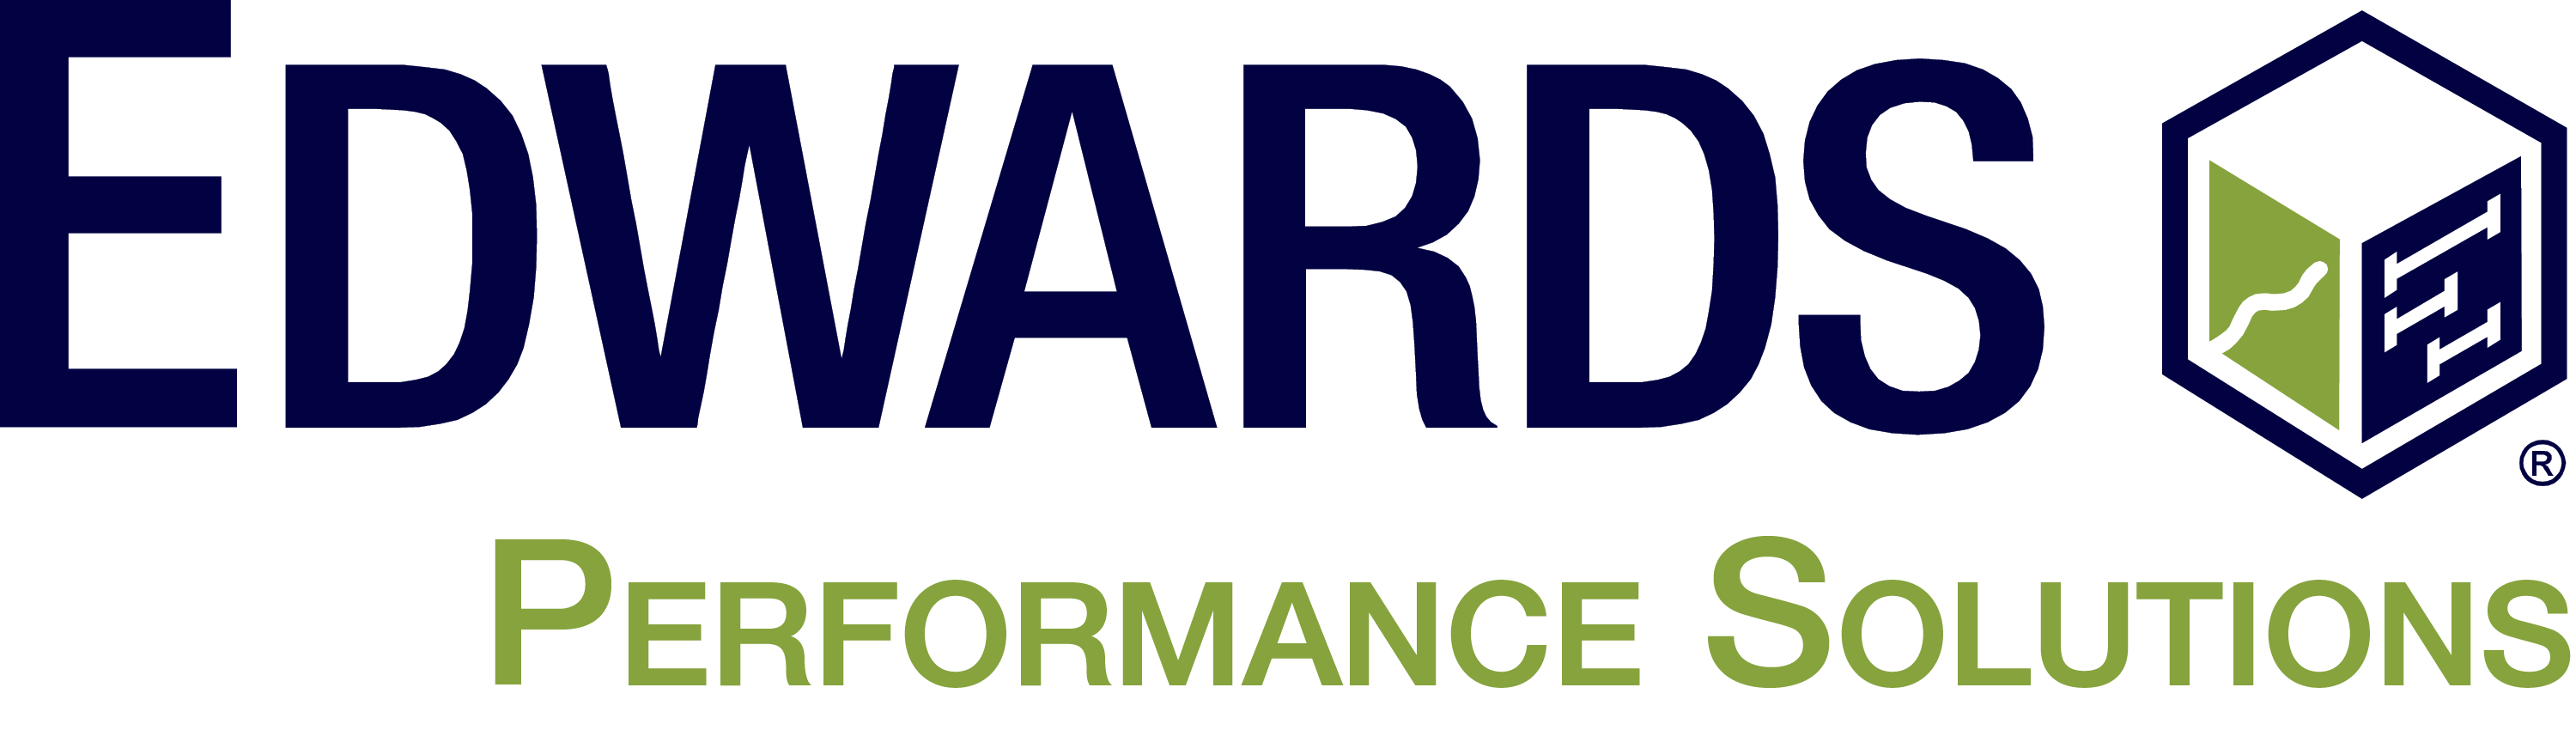 Edwards Performance Solutions logo